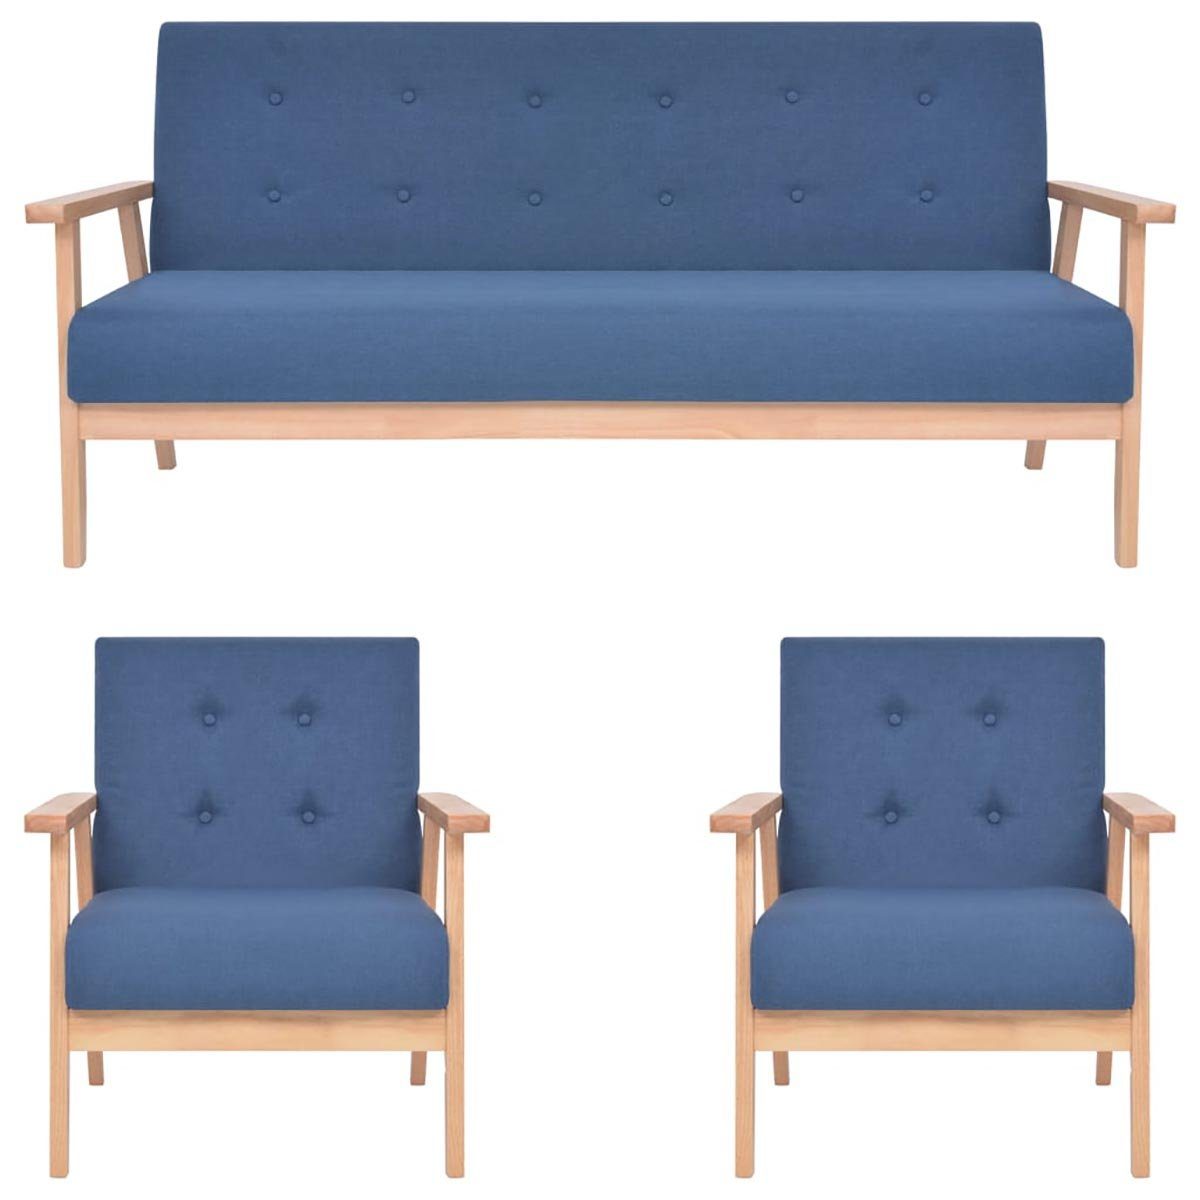 DOTMALL Big-Sofa 3-teilige Sofagarnitur, Stoff, Blau, Familien-Wohnzimmer